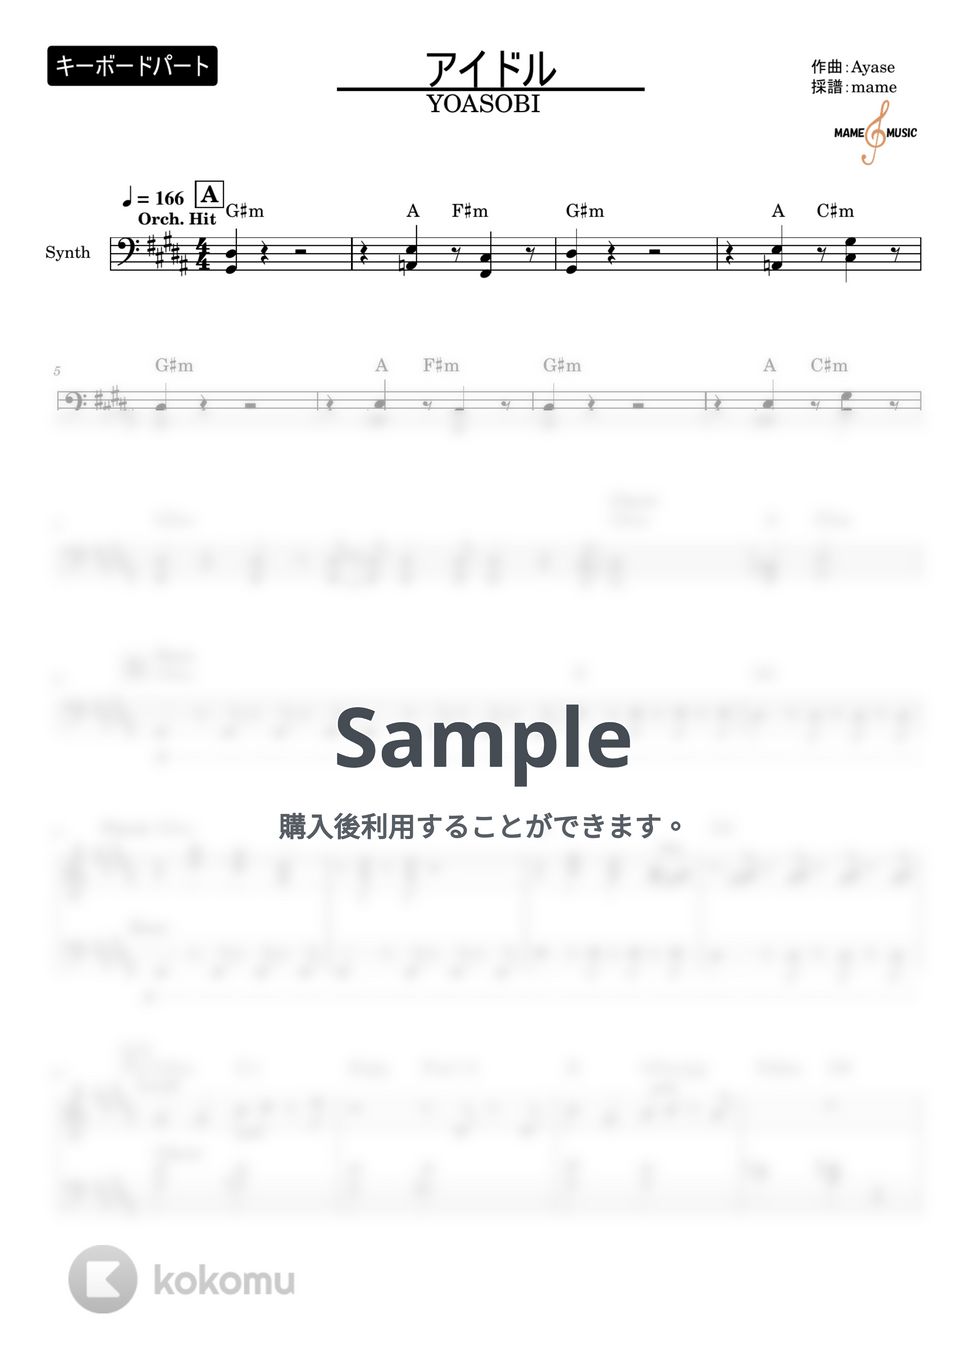 YOASOBI - アイドル (ピアノパート) by mame